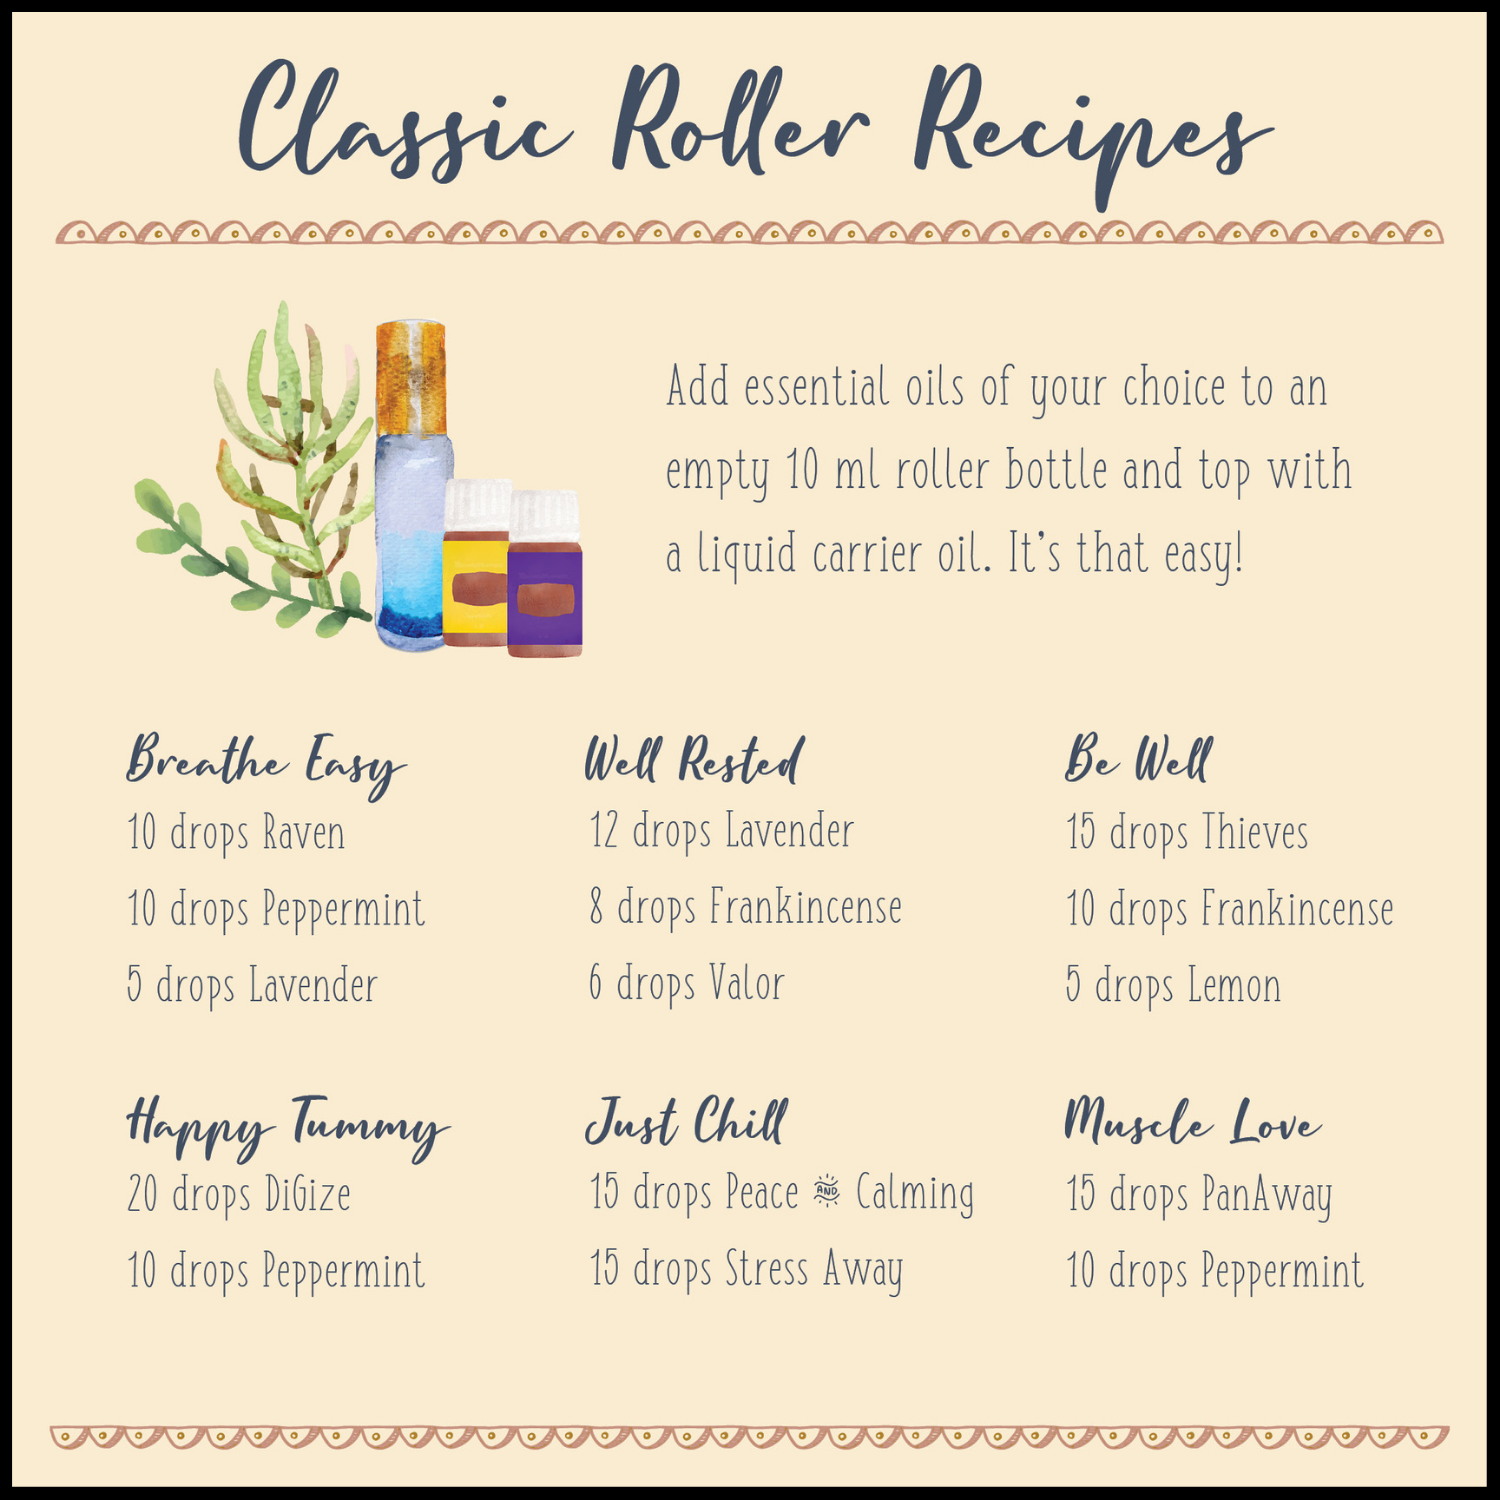 Classic Roller Recipes.png